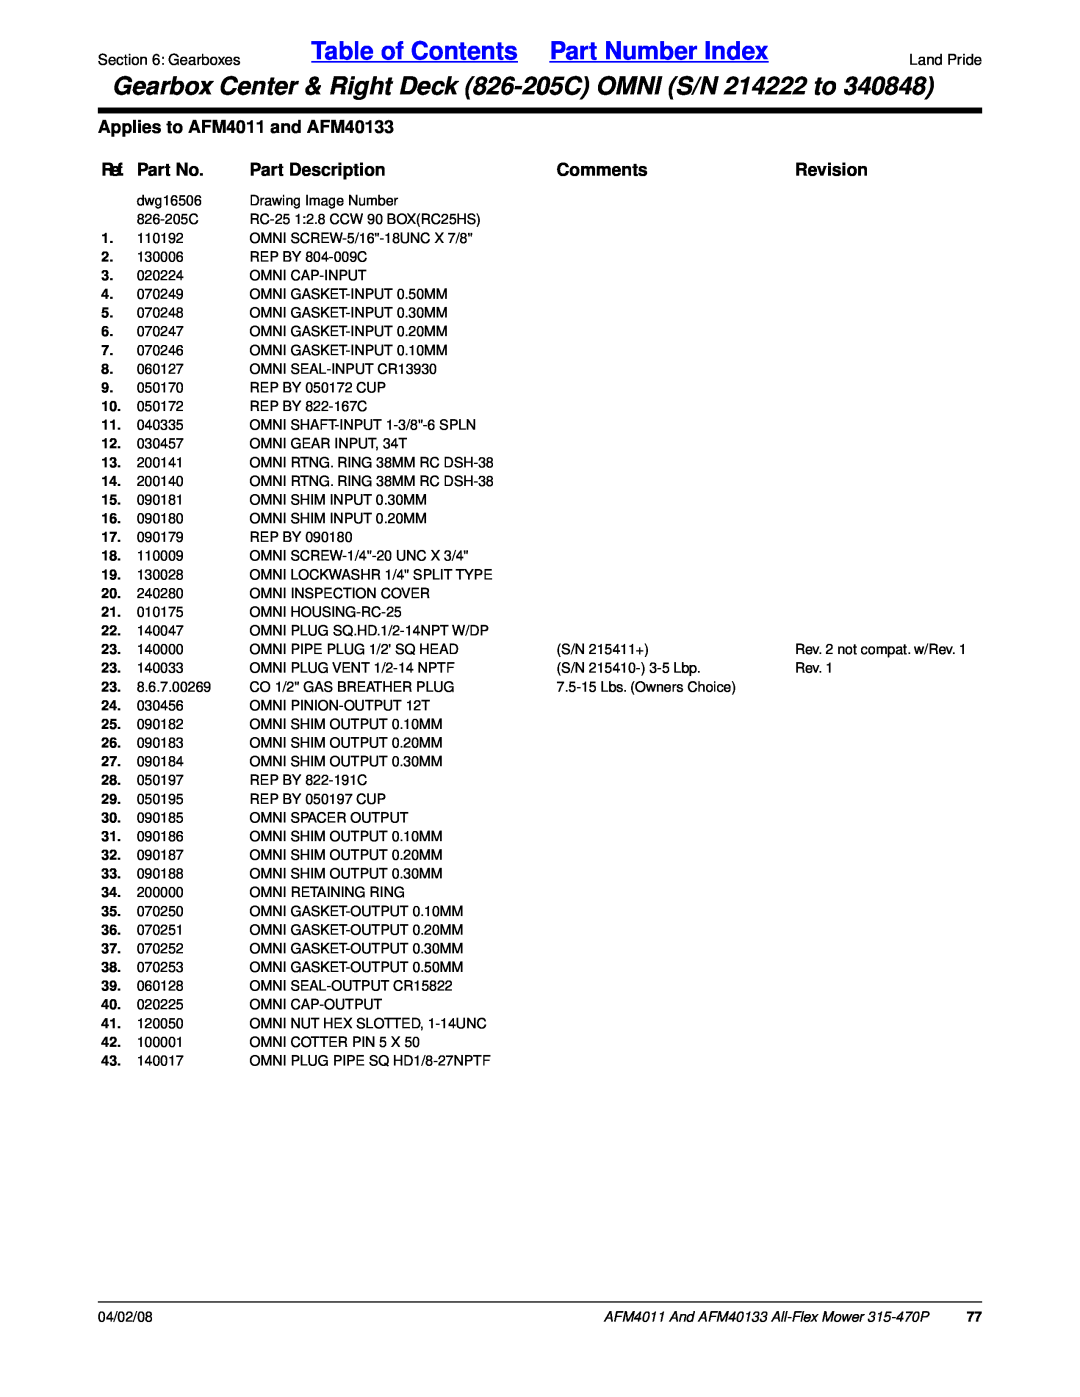 Land Pride manual Table of Contents Part Number Index, Applies to AFM4011 and AFM40133, Ref. Part No, Part Description 